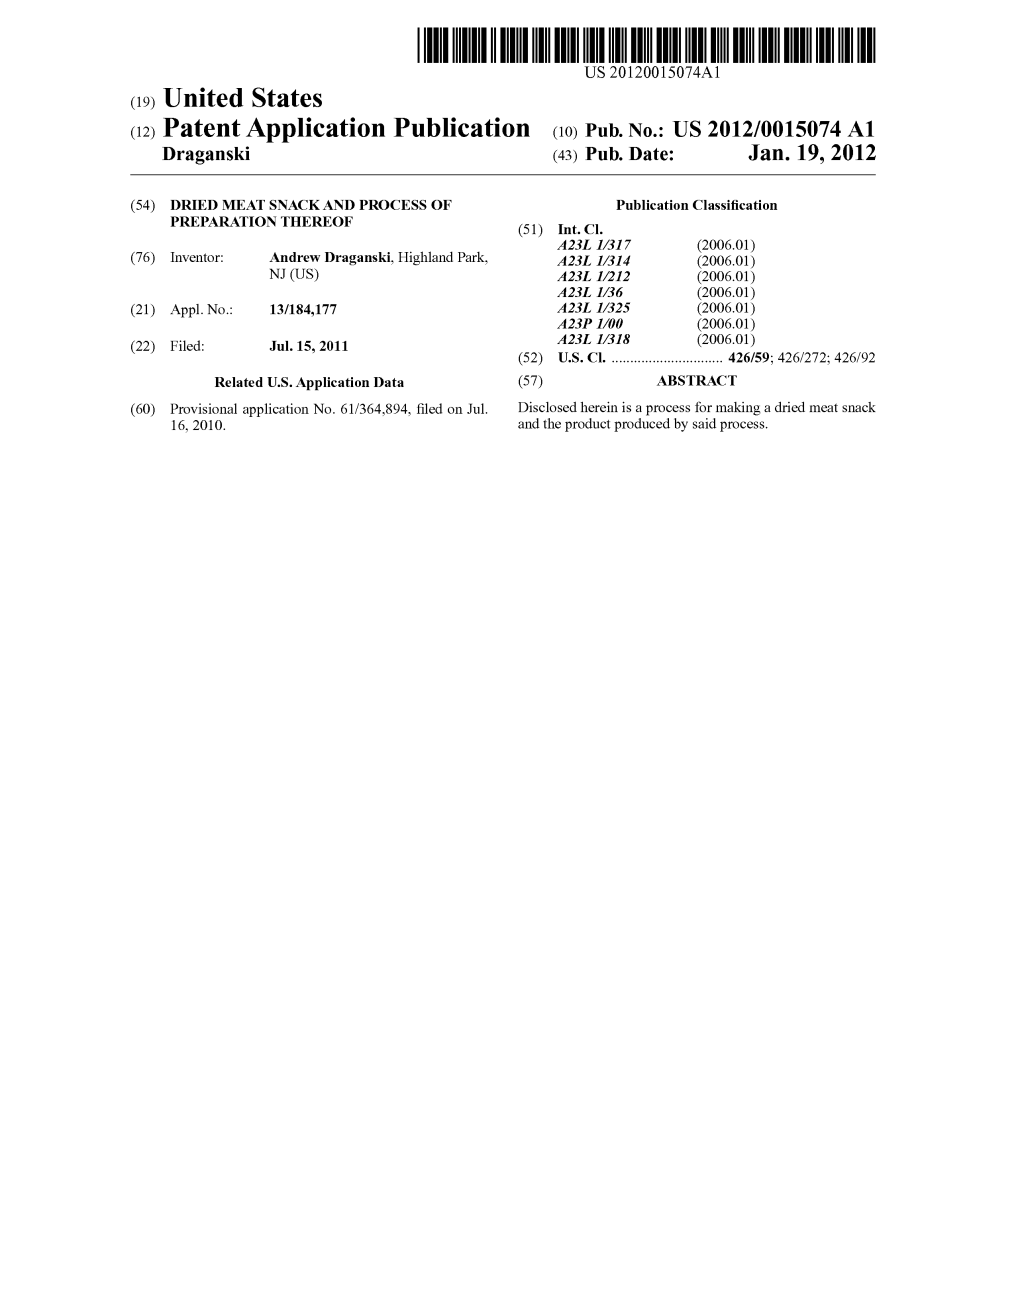 (12) Patent Application Publication (10) Pub. No.: US 2012/0015074 A1 Draganski (43) Pub